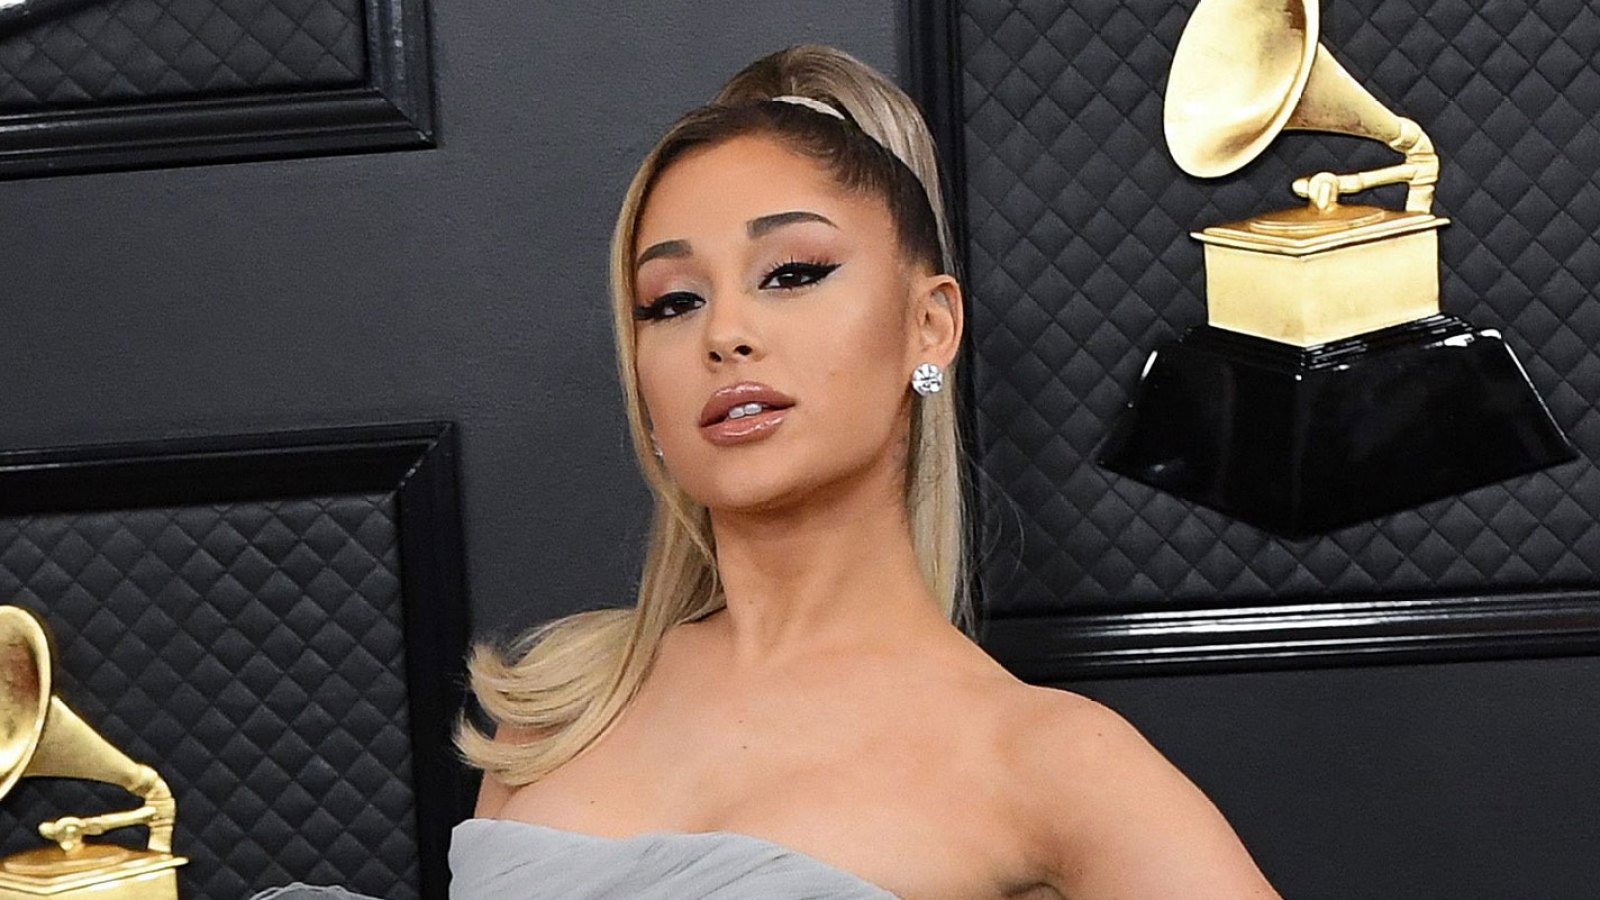 Ariana Grande Porn Star Celebs - Grammys 2022: Ariana Grande Skips Awards Show Amid 3 Nominations